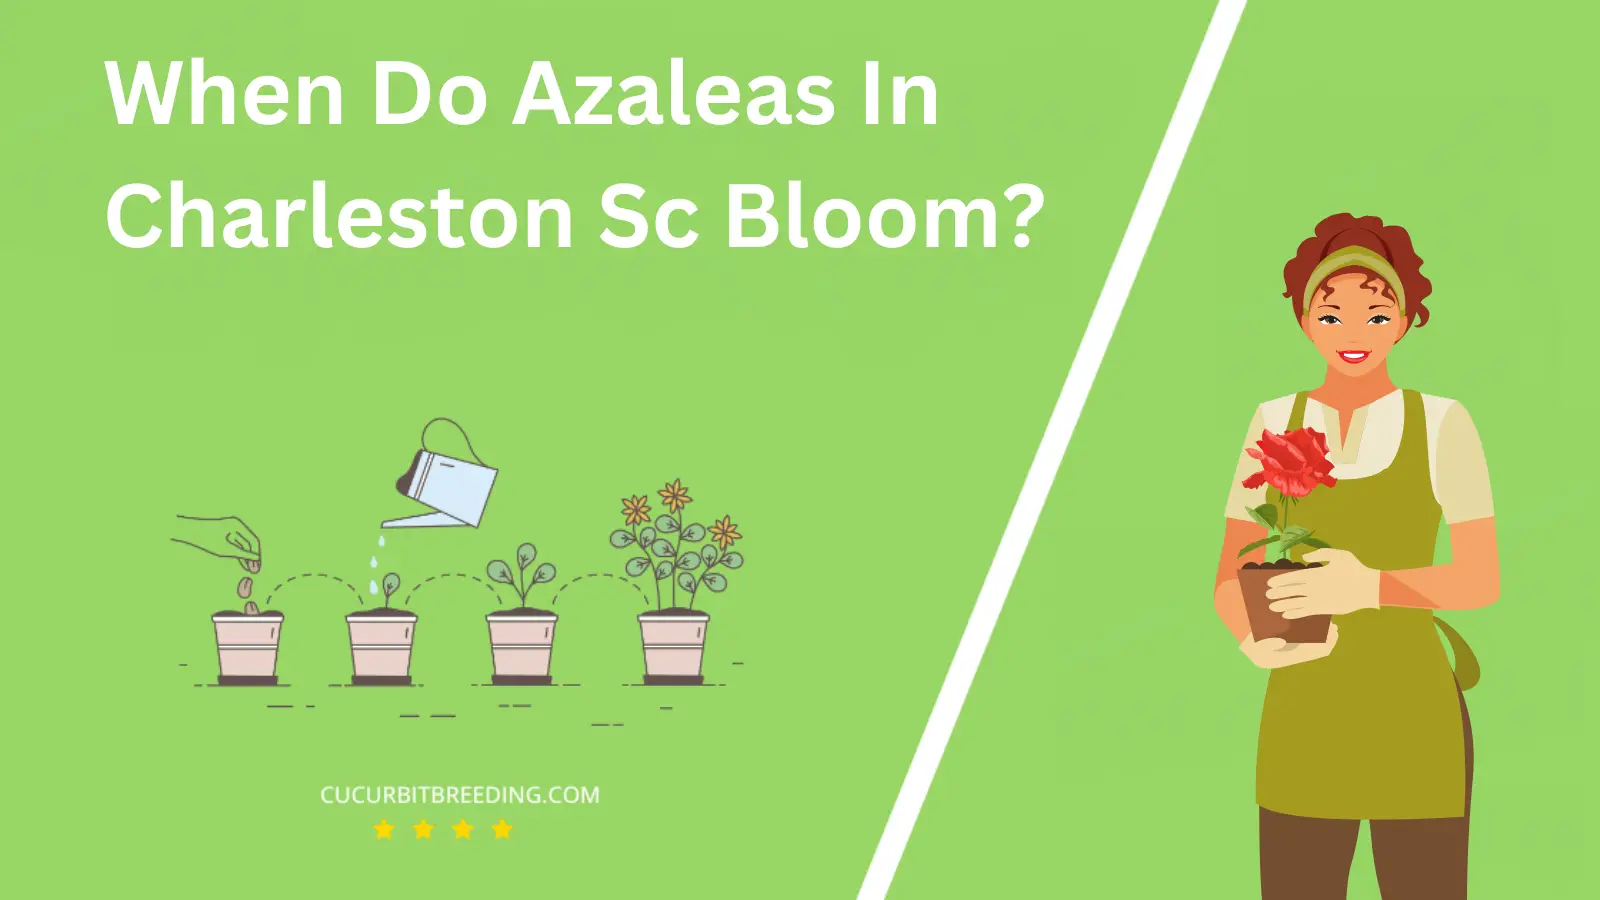 When Do Azaleas In Charleston Sc Bloom?